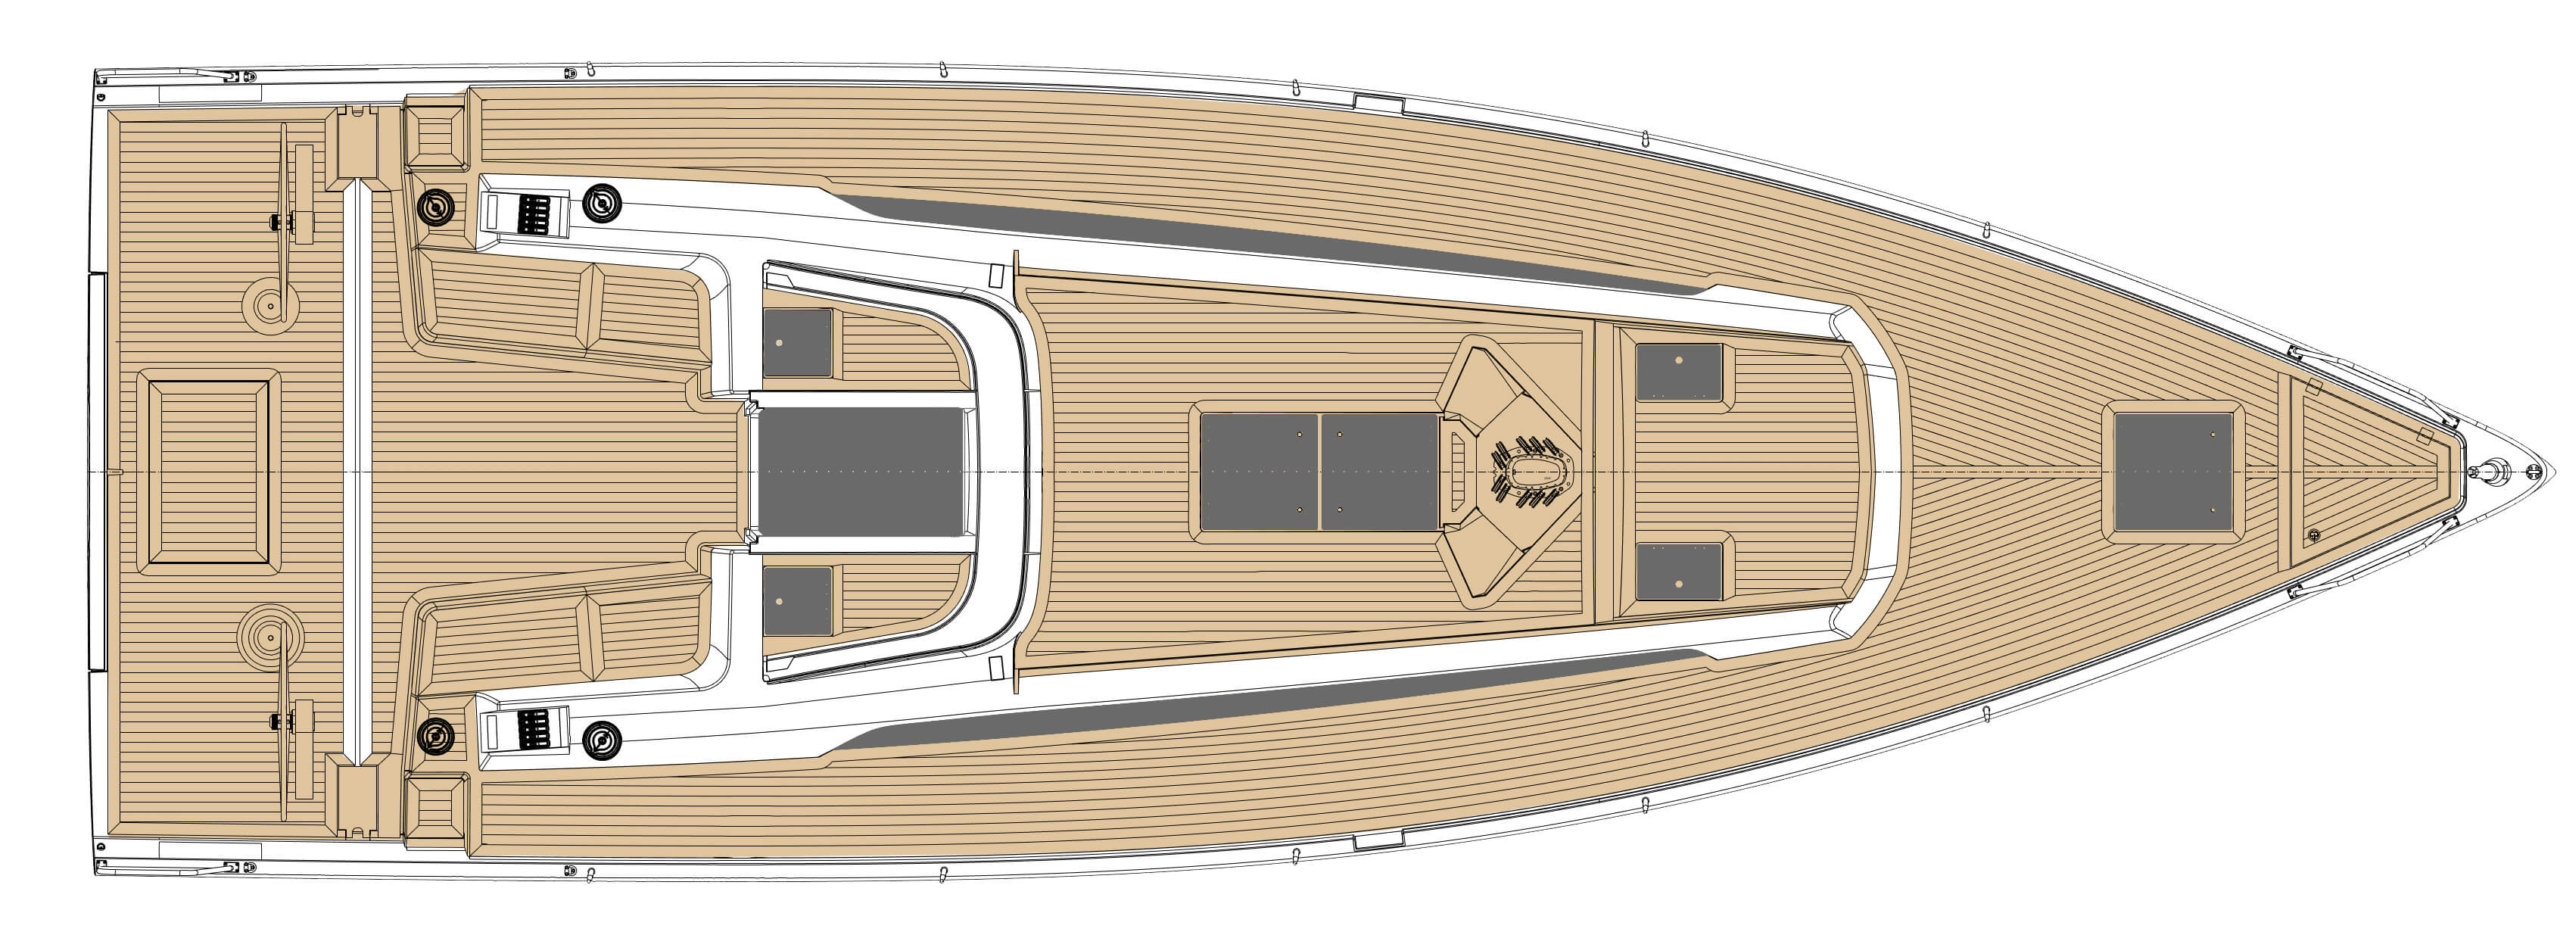 S40 deck